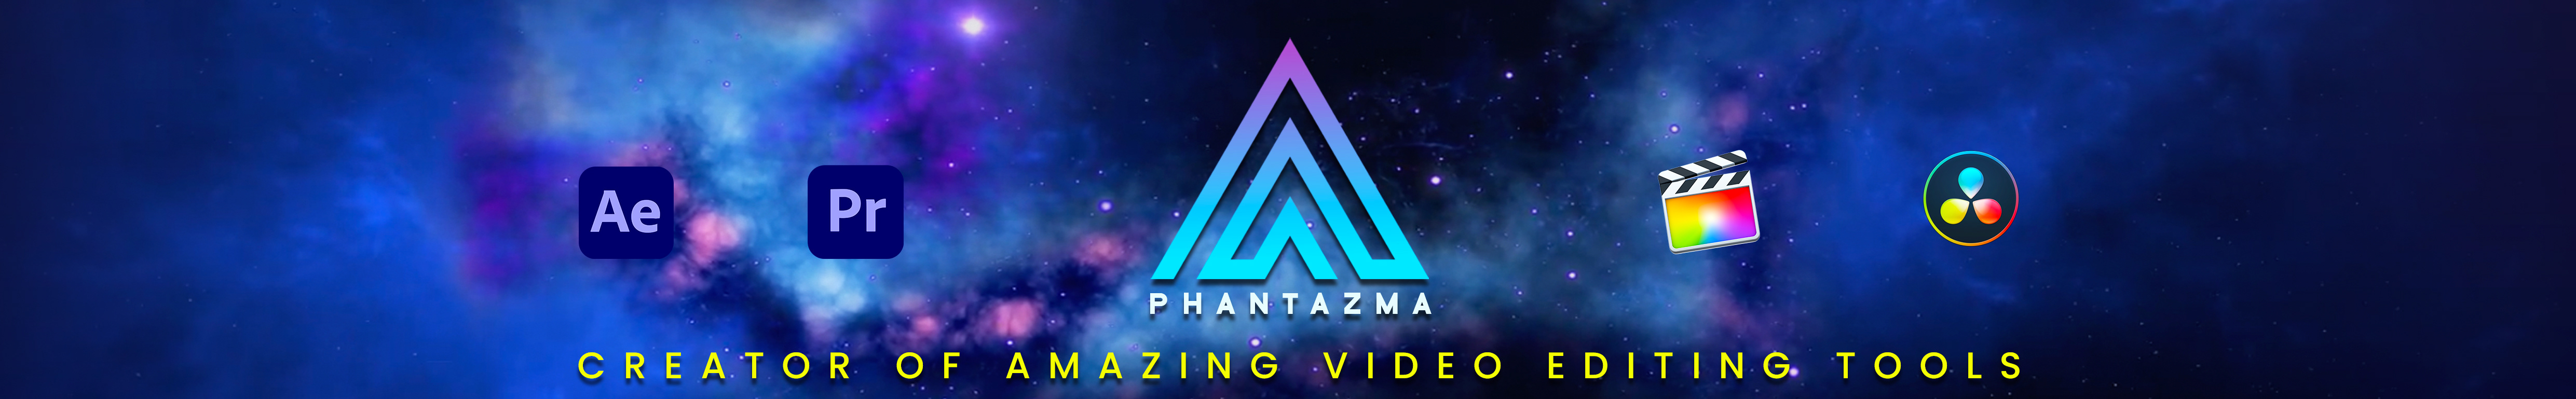 PHANTAZMA VFX's profile banner